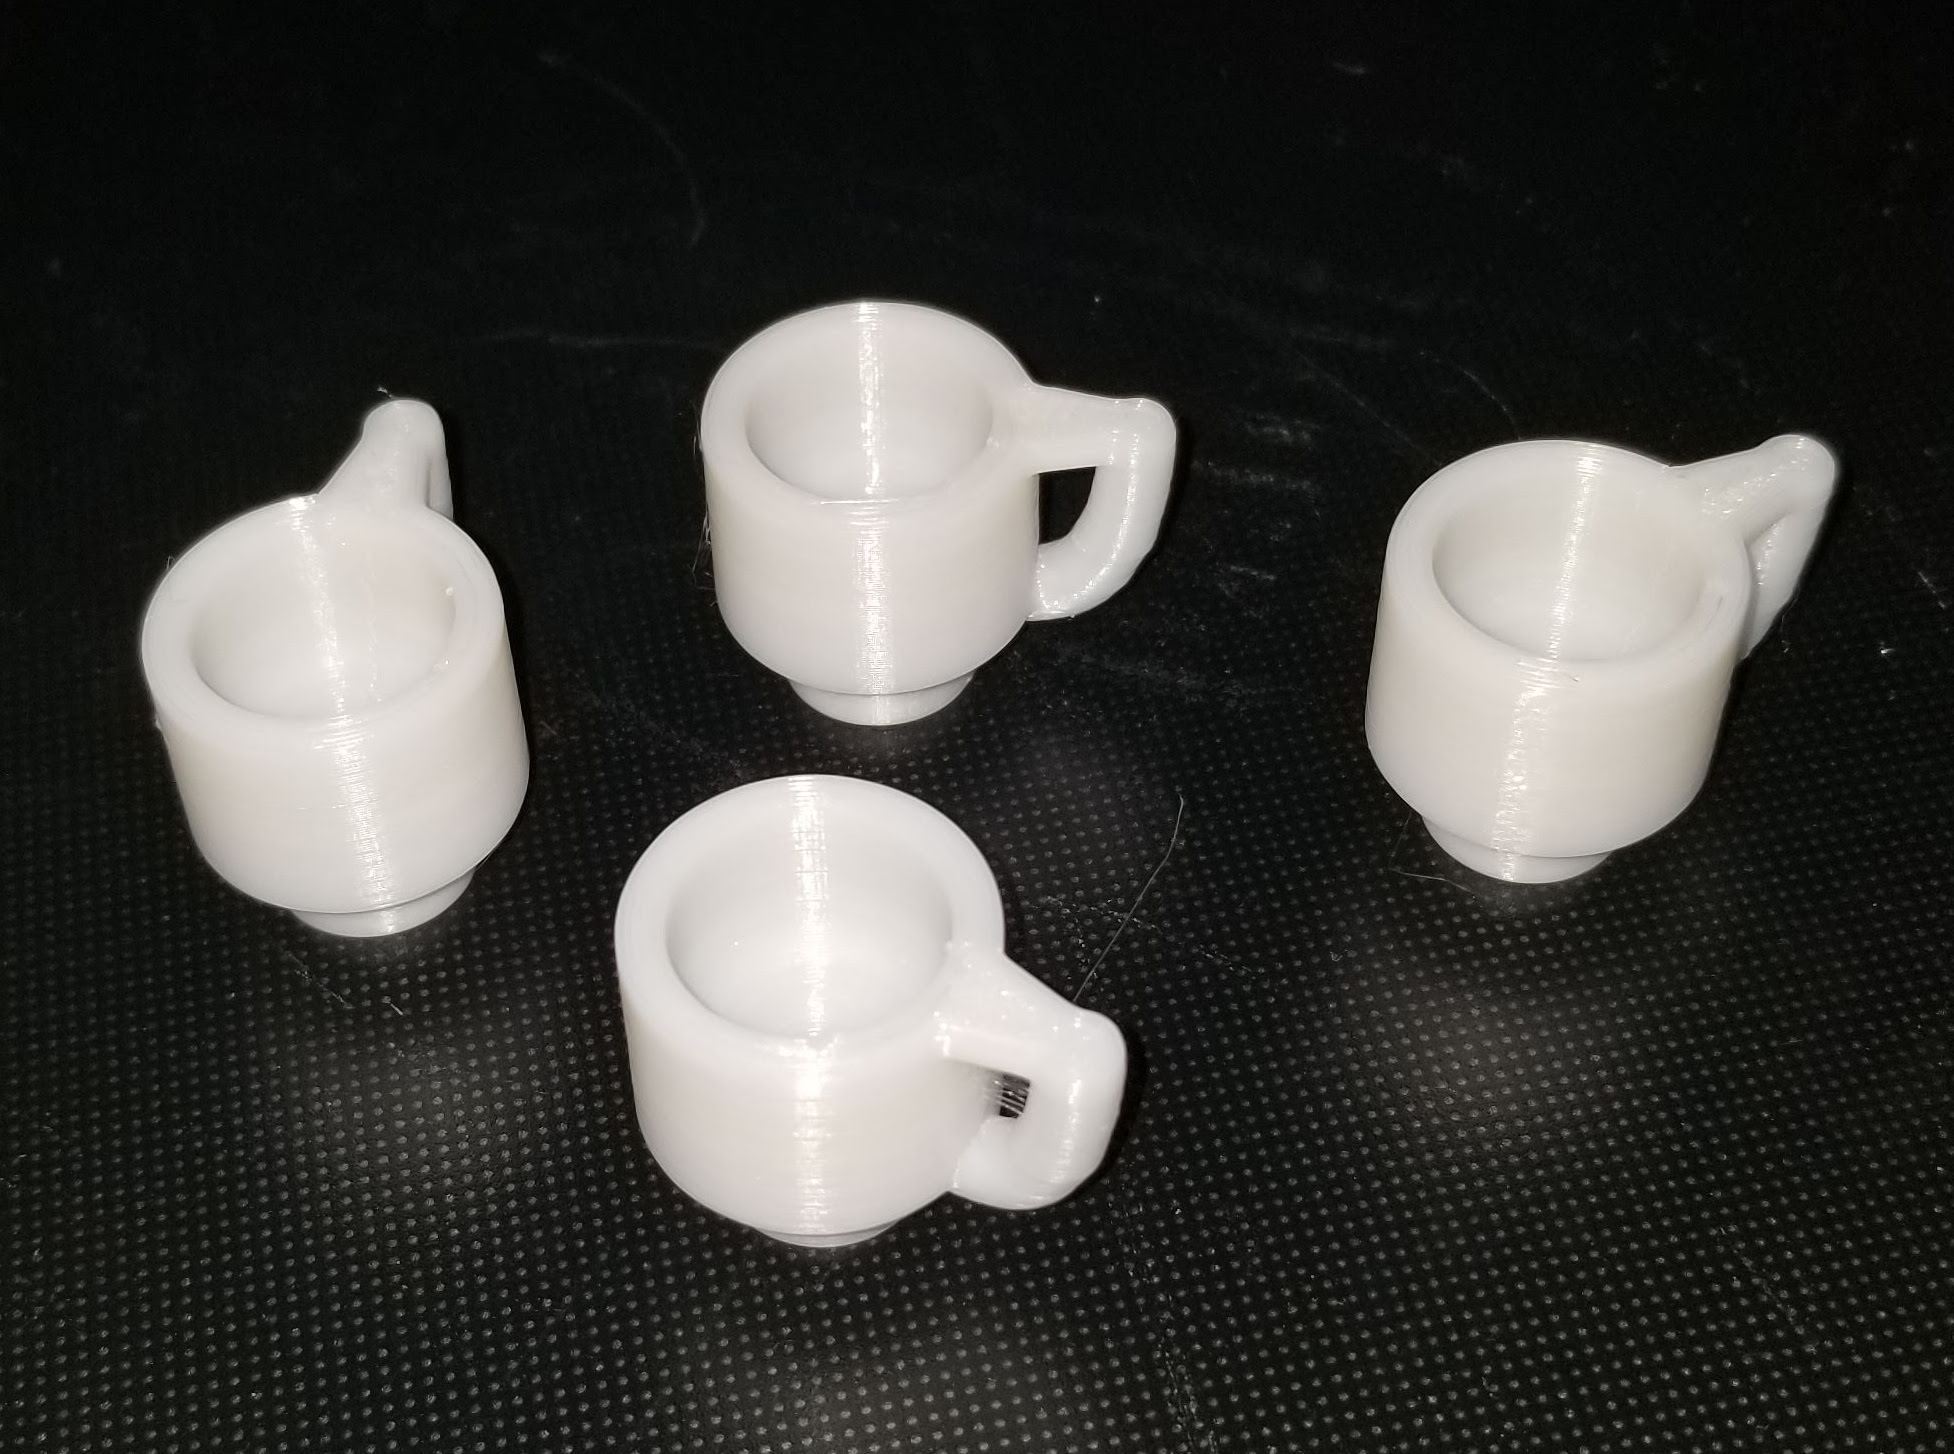 Coffee mugs (Duplo compatible)